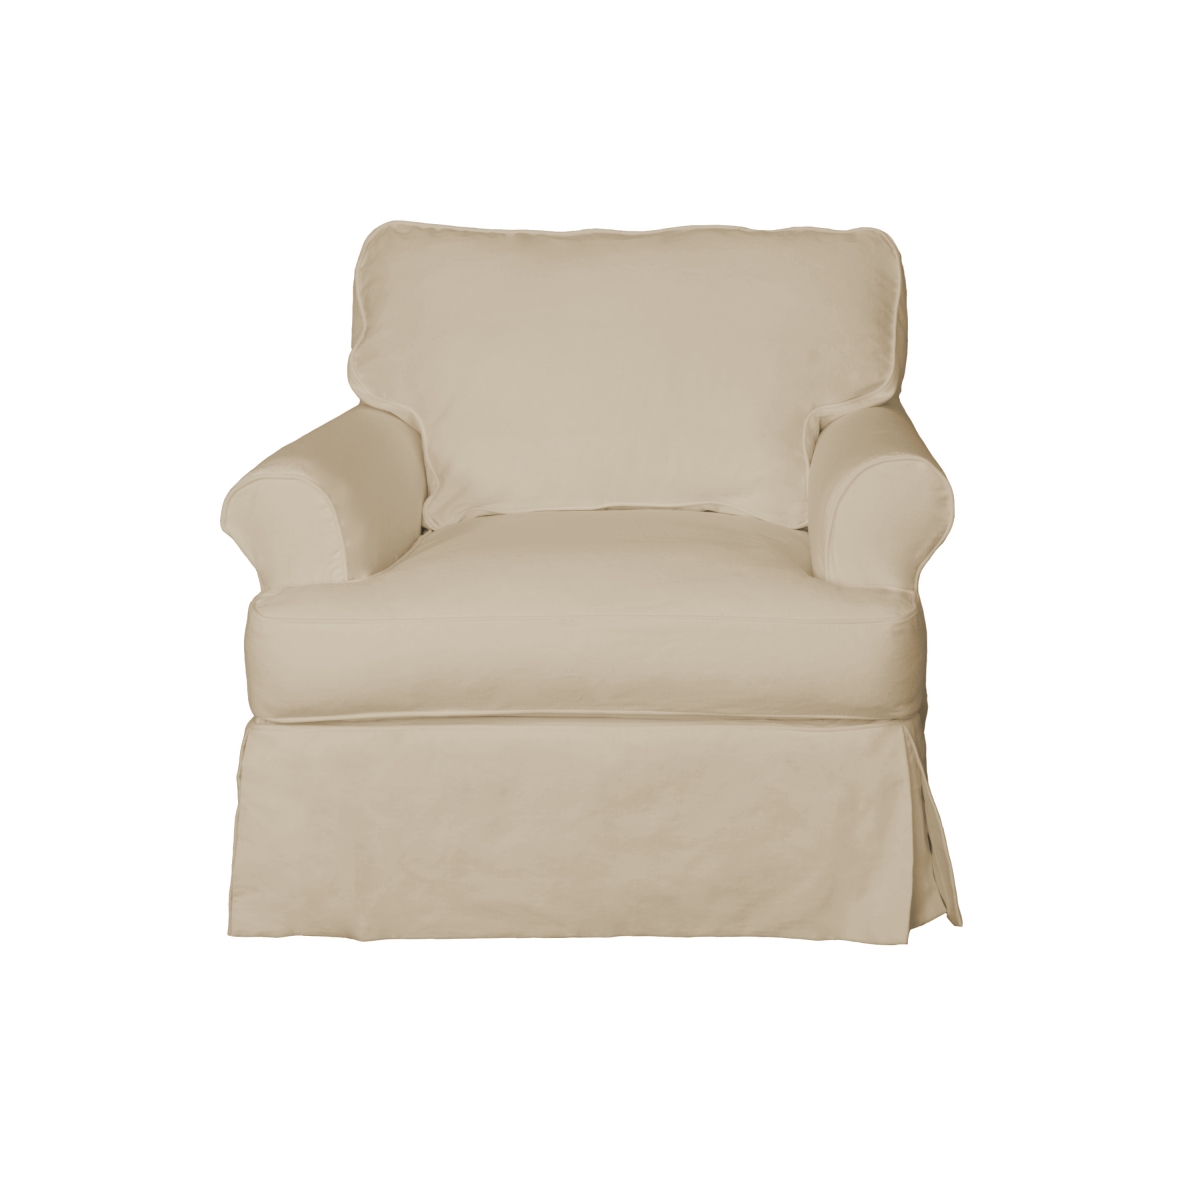 Su-117620sc-30-391084 Horizon T-cushion Chair & Ottoman Slipcover Only, Tan - 18.3 X 32.7 X 25 In.